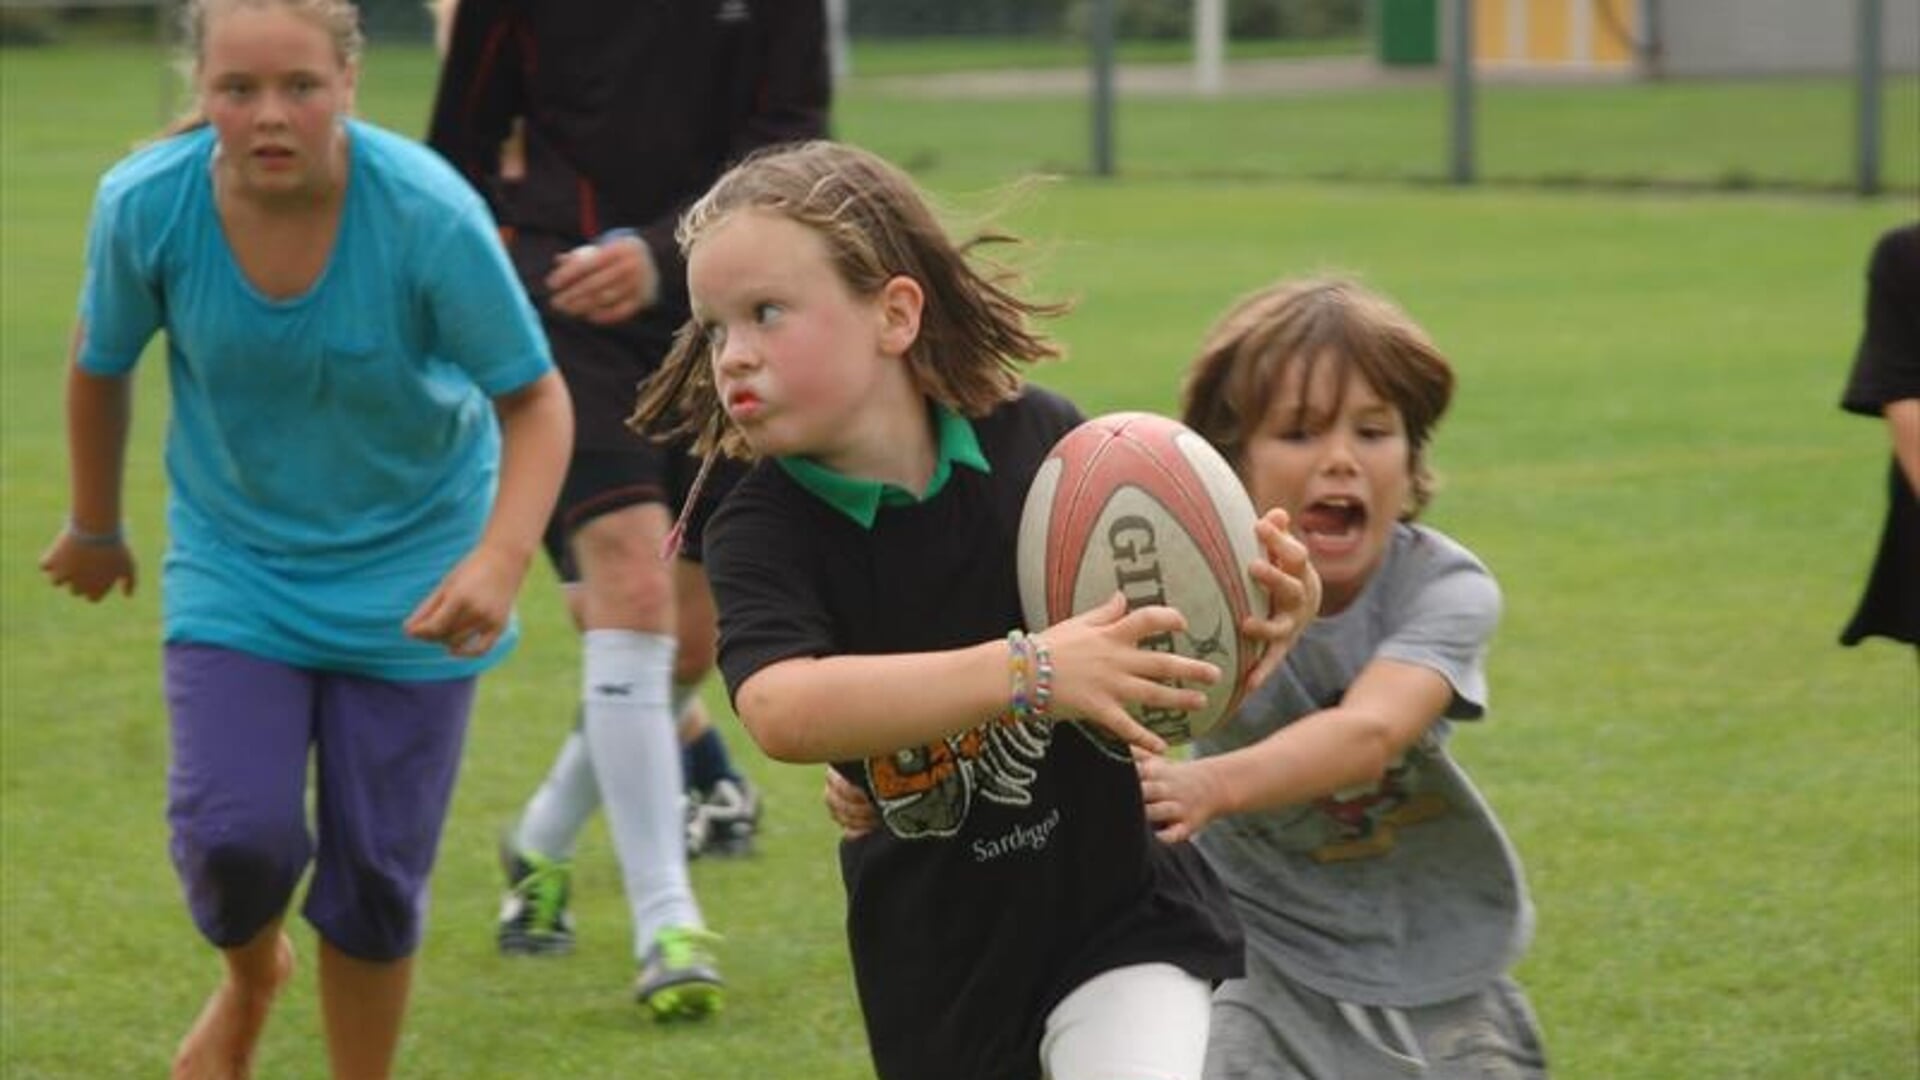 Rugbyclub Ducks gaat samen met Buurtsport Boxtel en Sport Approved de rugbysport in Boxtel onder de jeugd promoten. 